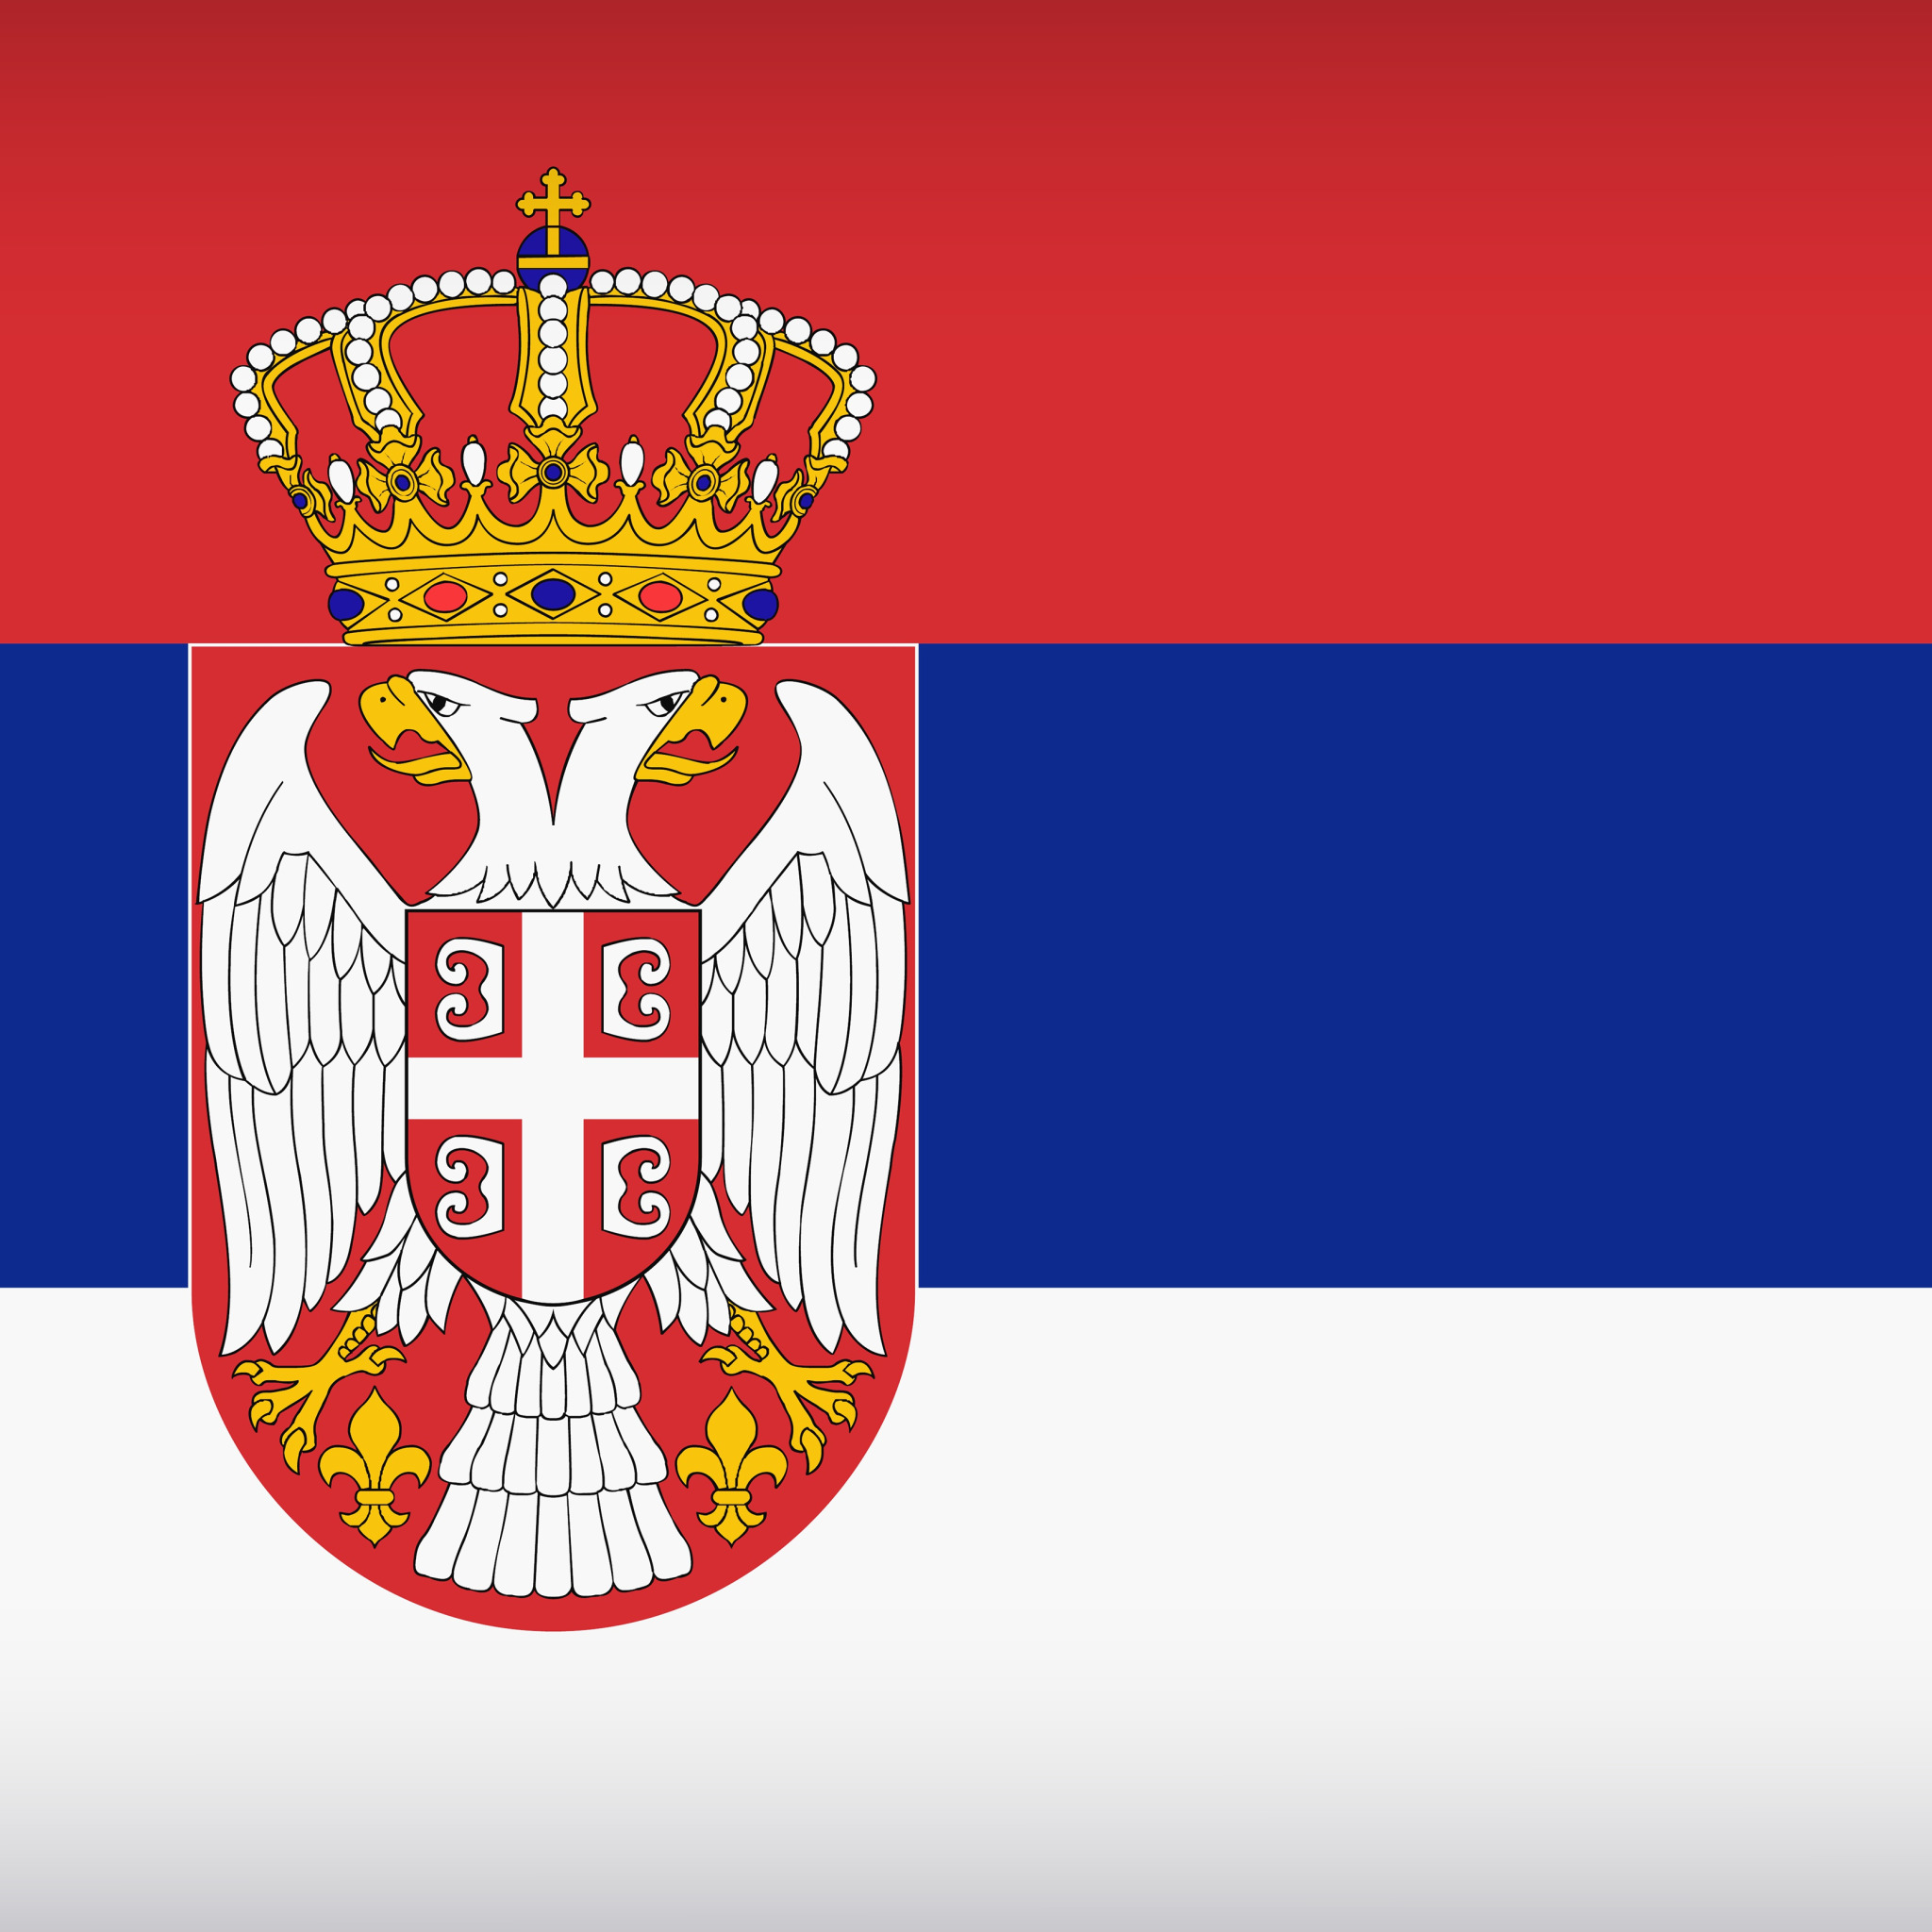 Флаг Сербии 1914. Республика Сербия флаг. Сербия флаг и герб. Флаг Сербии 1945.